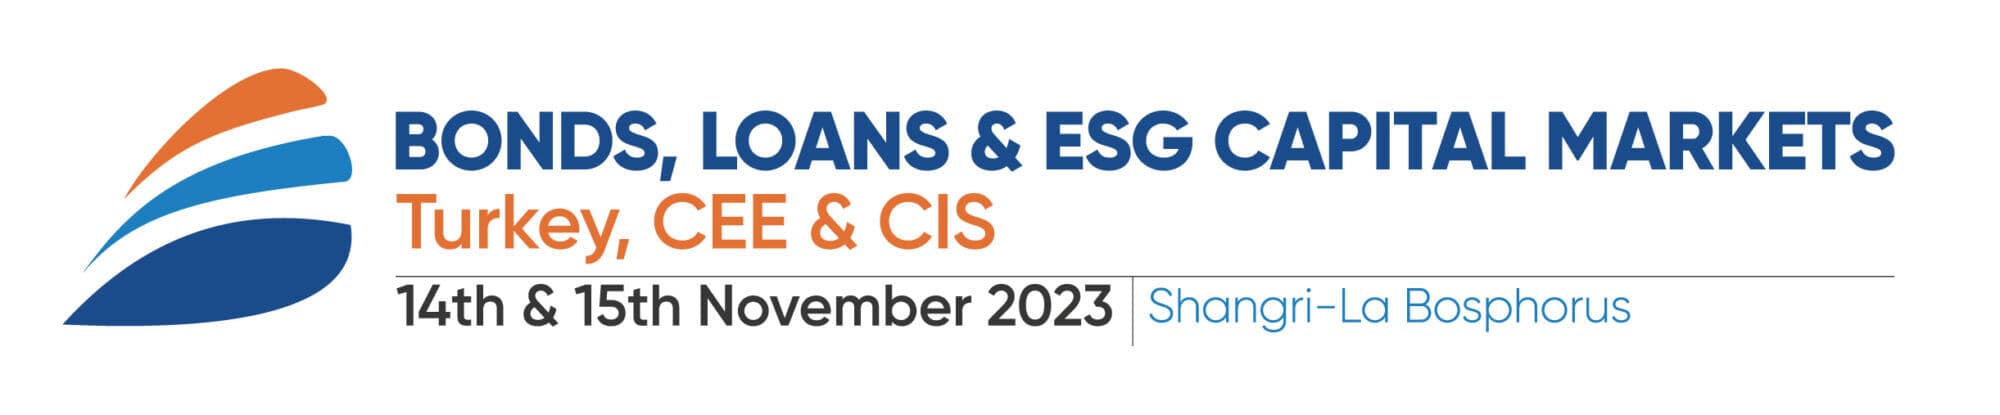 Bonds, Loans & ESG Capital Markets Turkey, CEE & CIS 2023